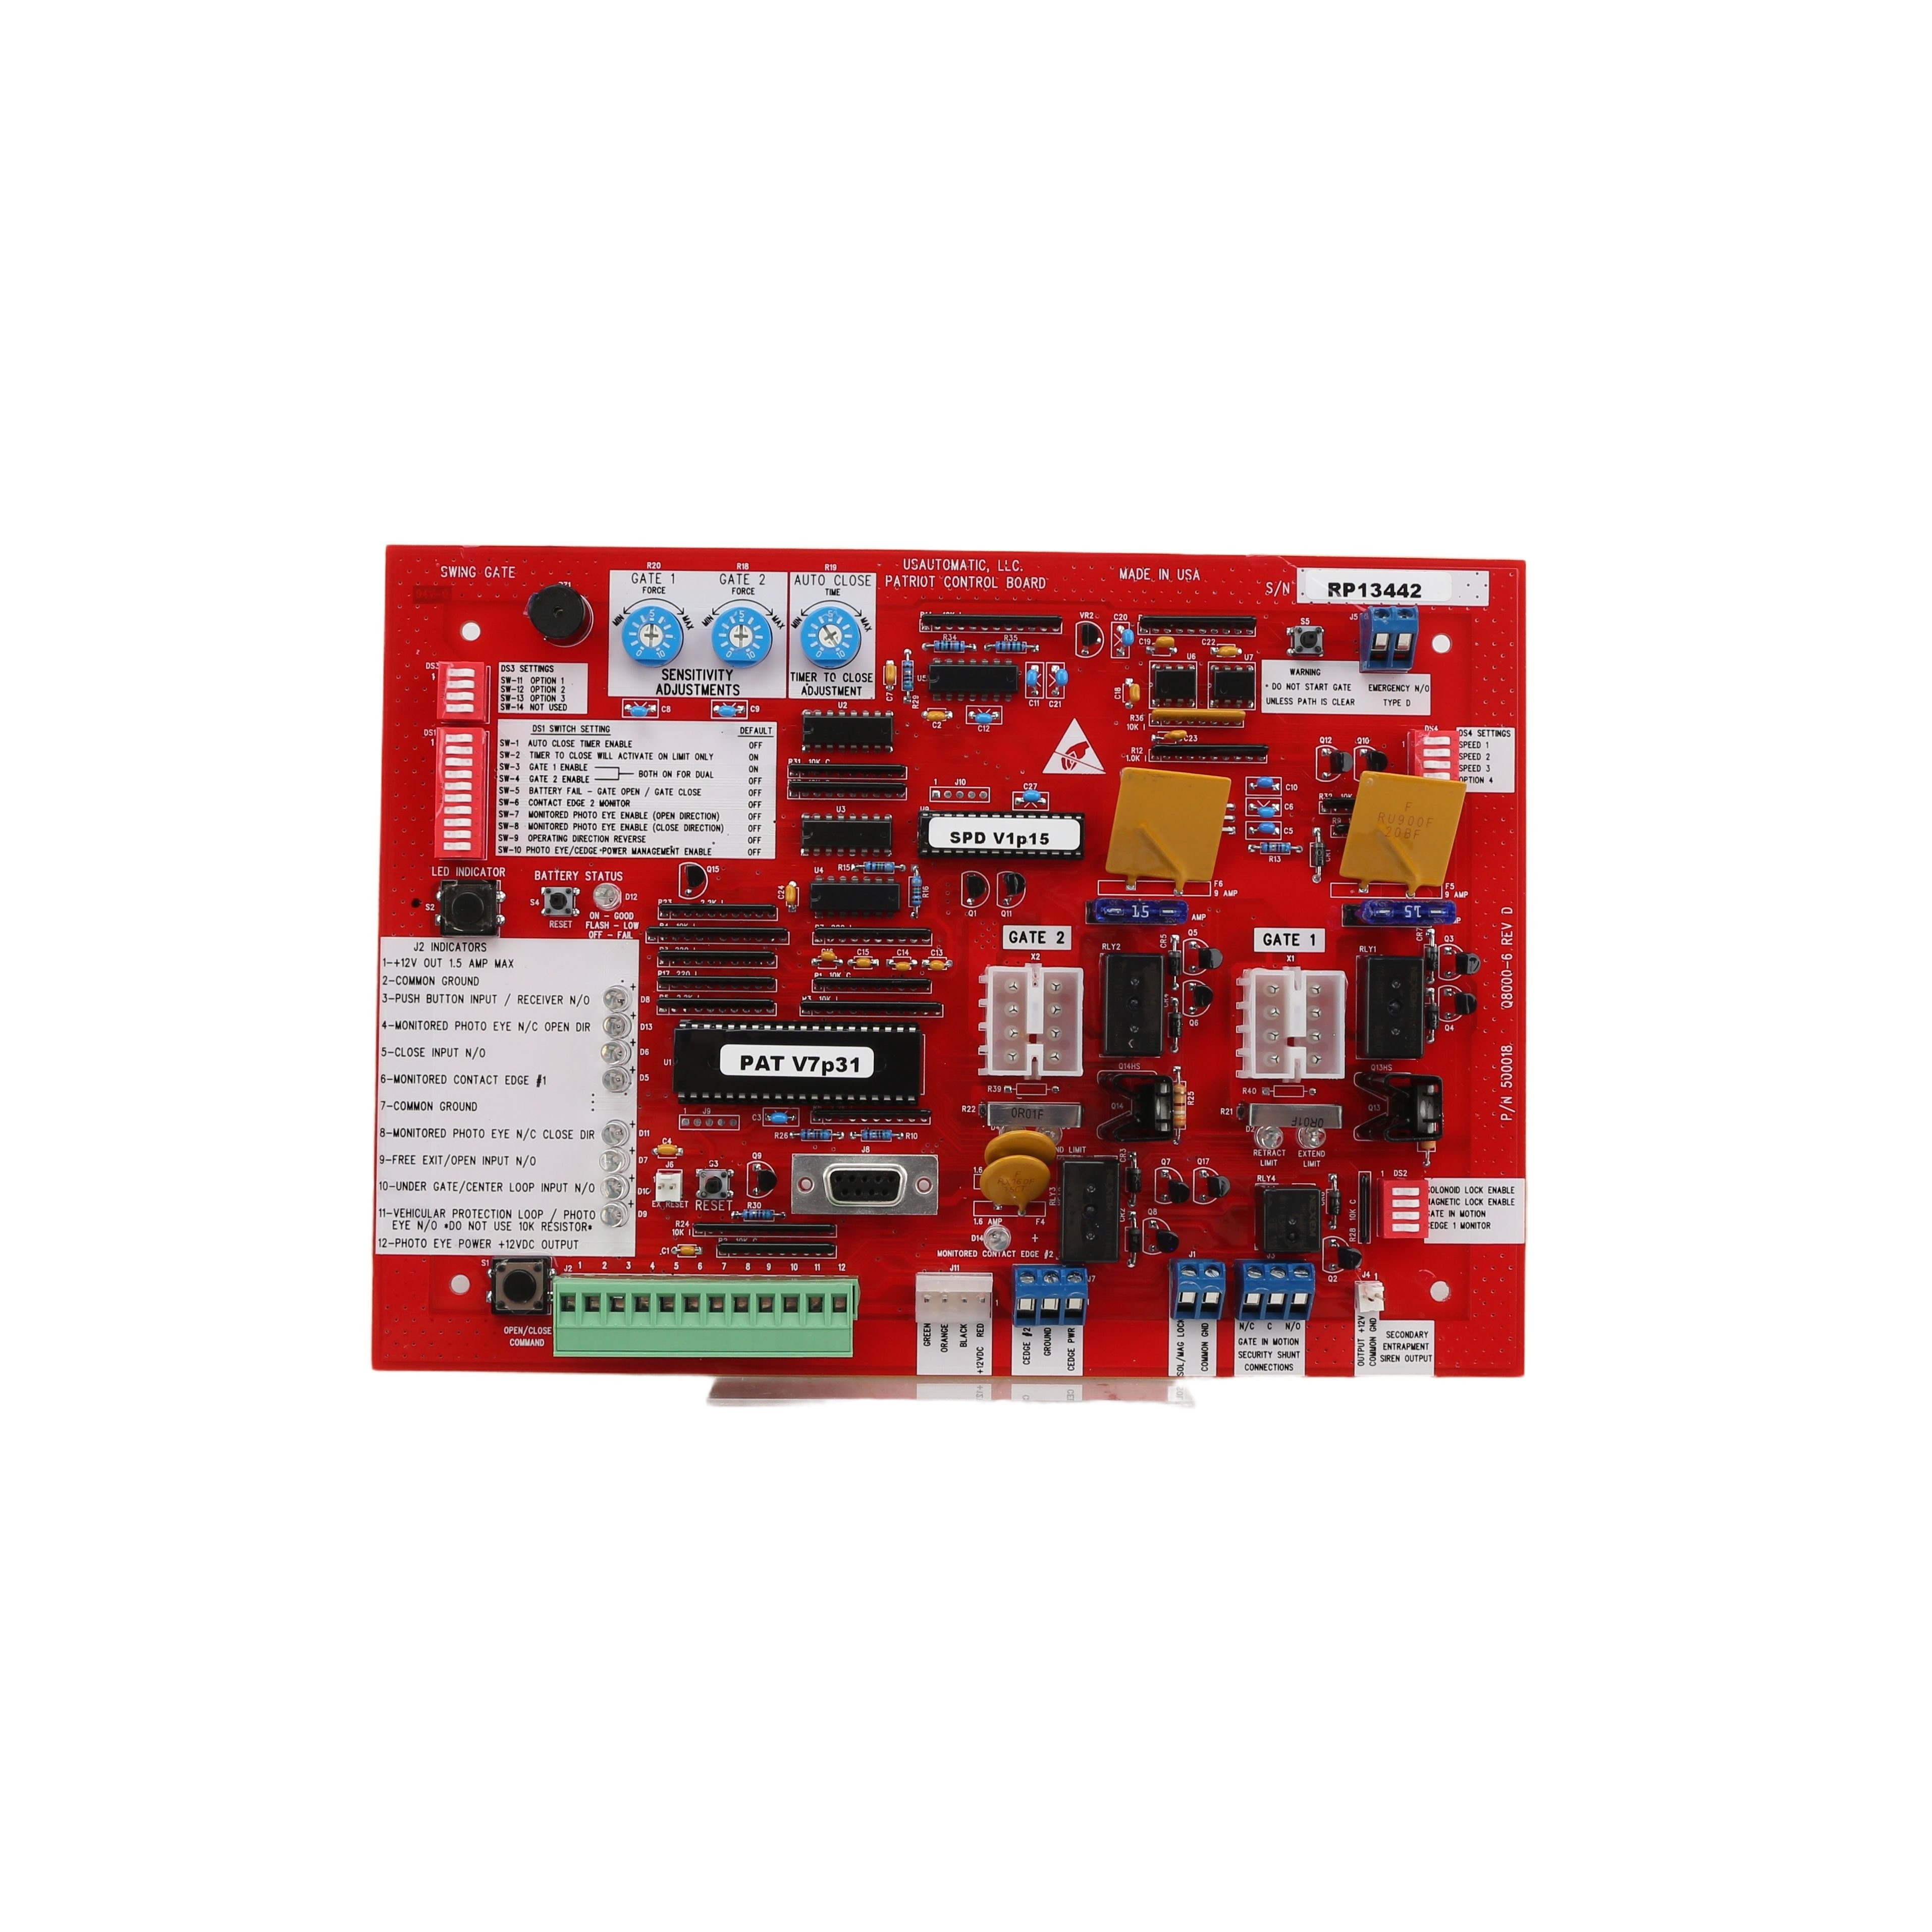 EA658 - 200 Amp Remote Control Power Switch EA Relay - EA658 - 200